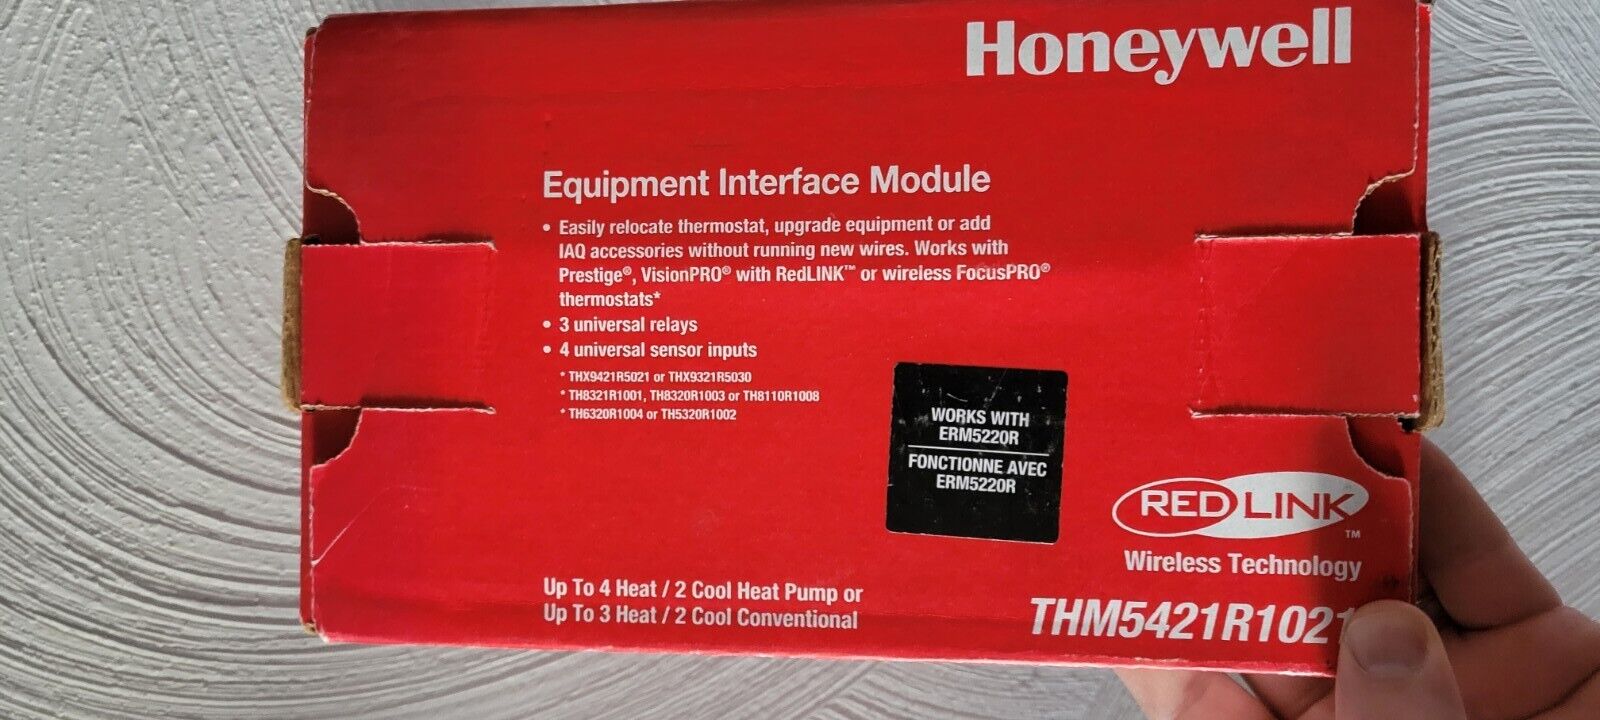 Honeywell THM5421R1021 Equipment Interface Module for Prestige IAQ and VisionPRO